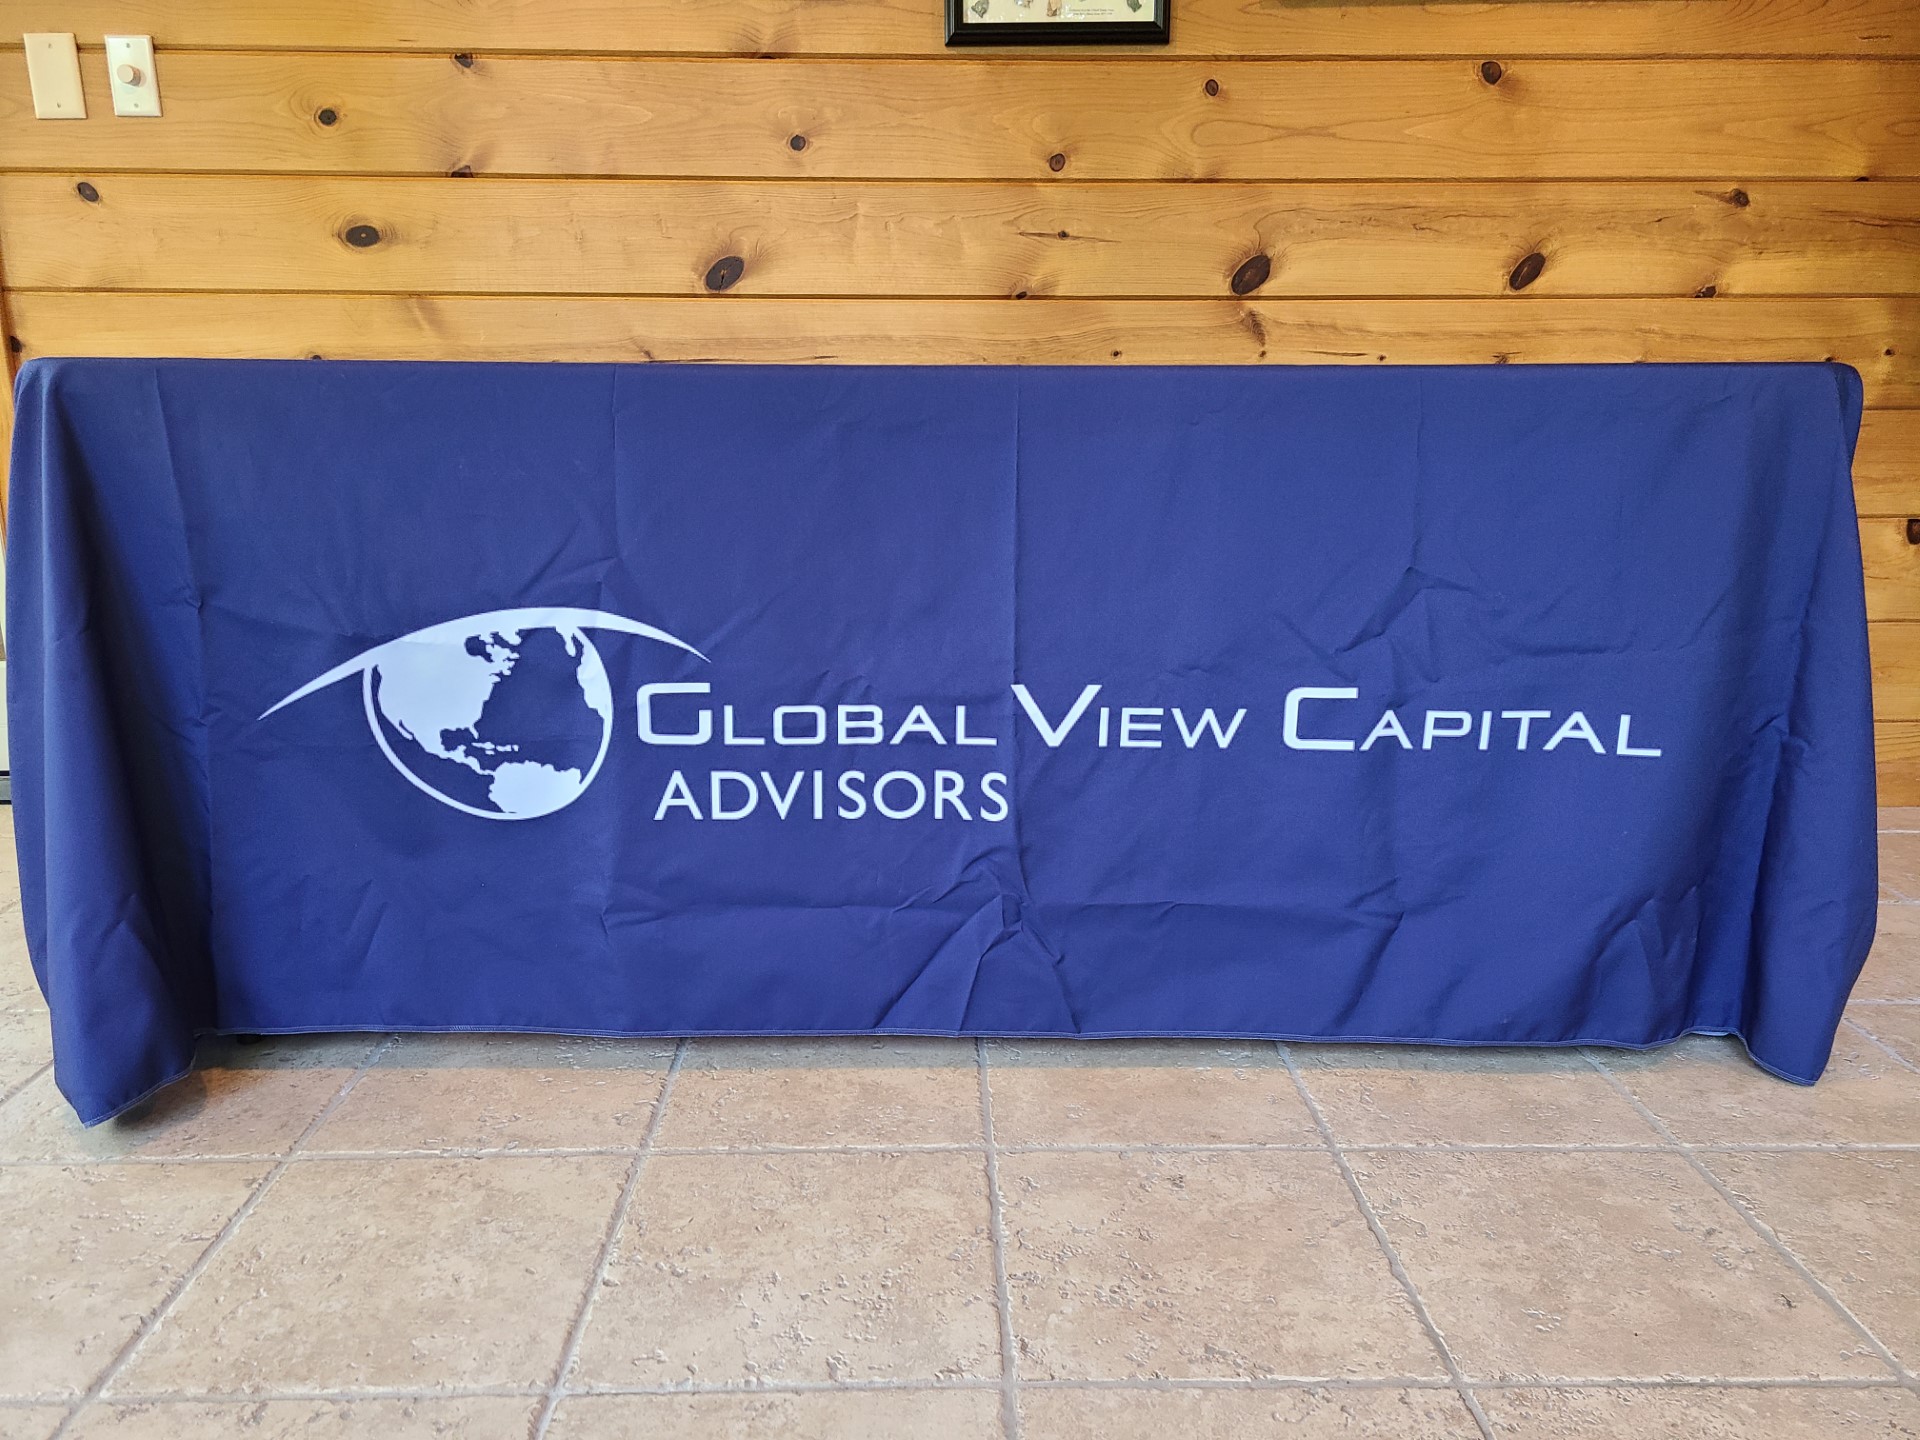  Global View Capital Advisors Table Cloth